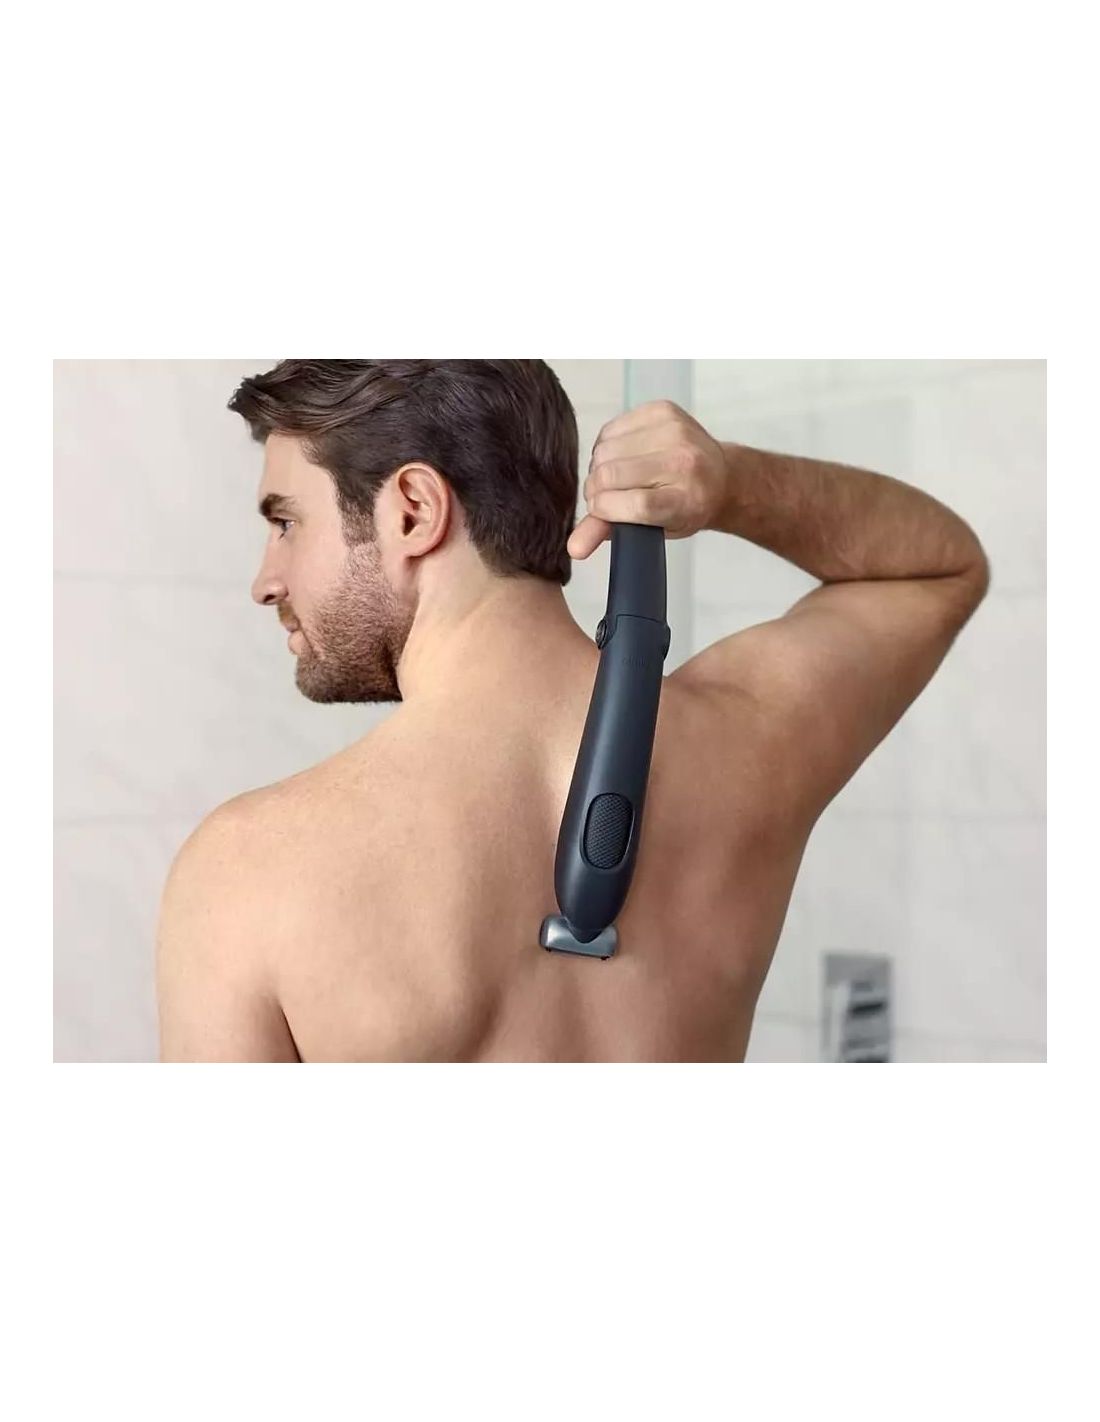 Philips BG5020/15 - Afeitadora corporal Series 5000 apta para ducha ·  Comprar ELECTRODOMÉSTICOS BARATOS en lacasadelelectrodomestico.com